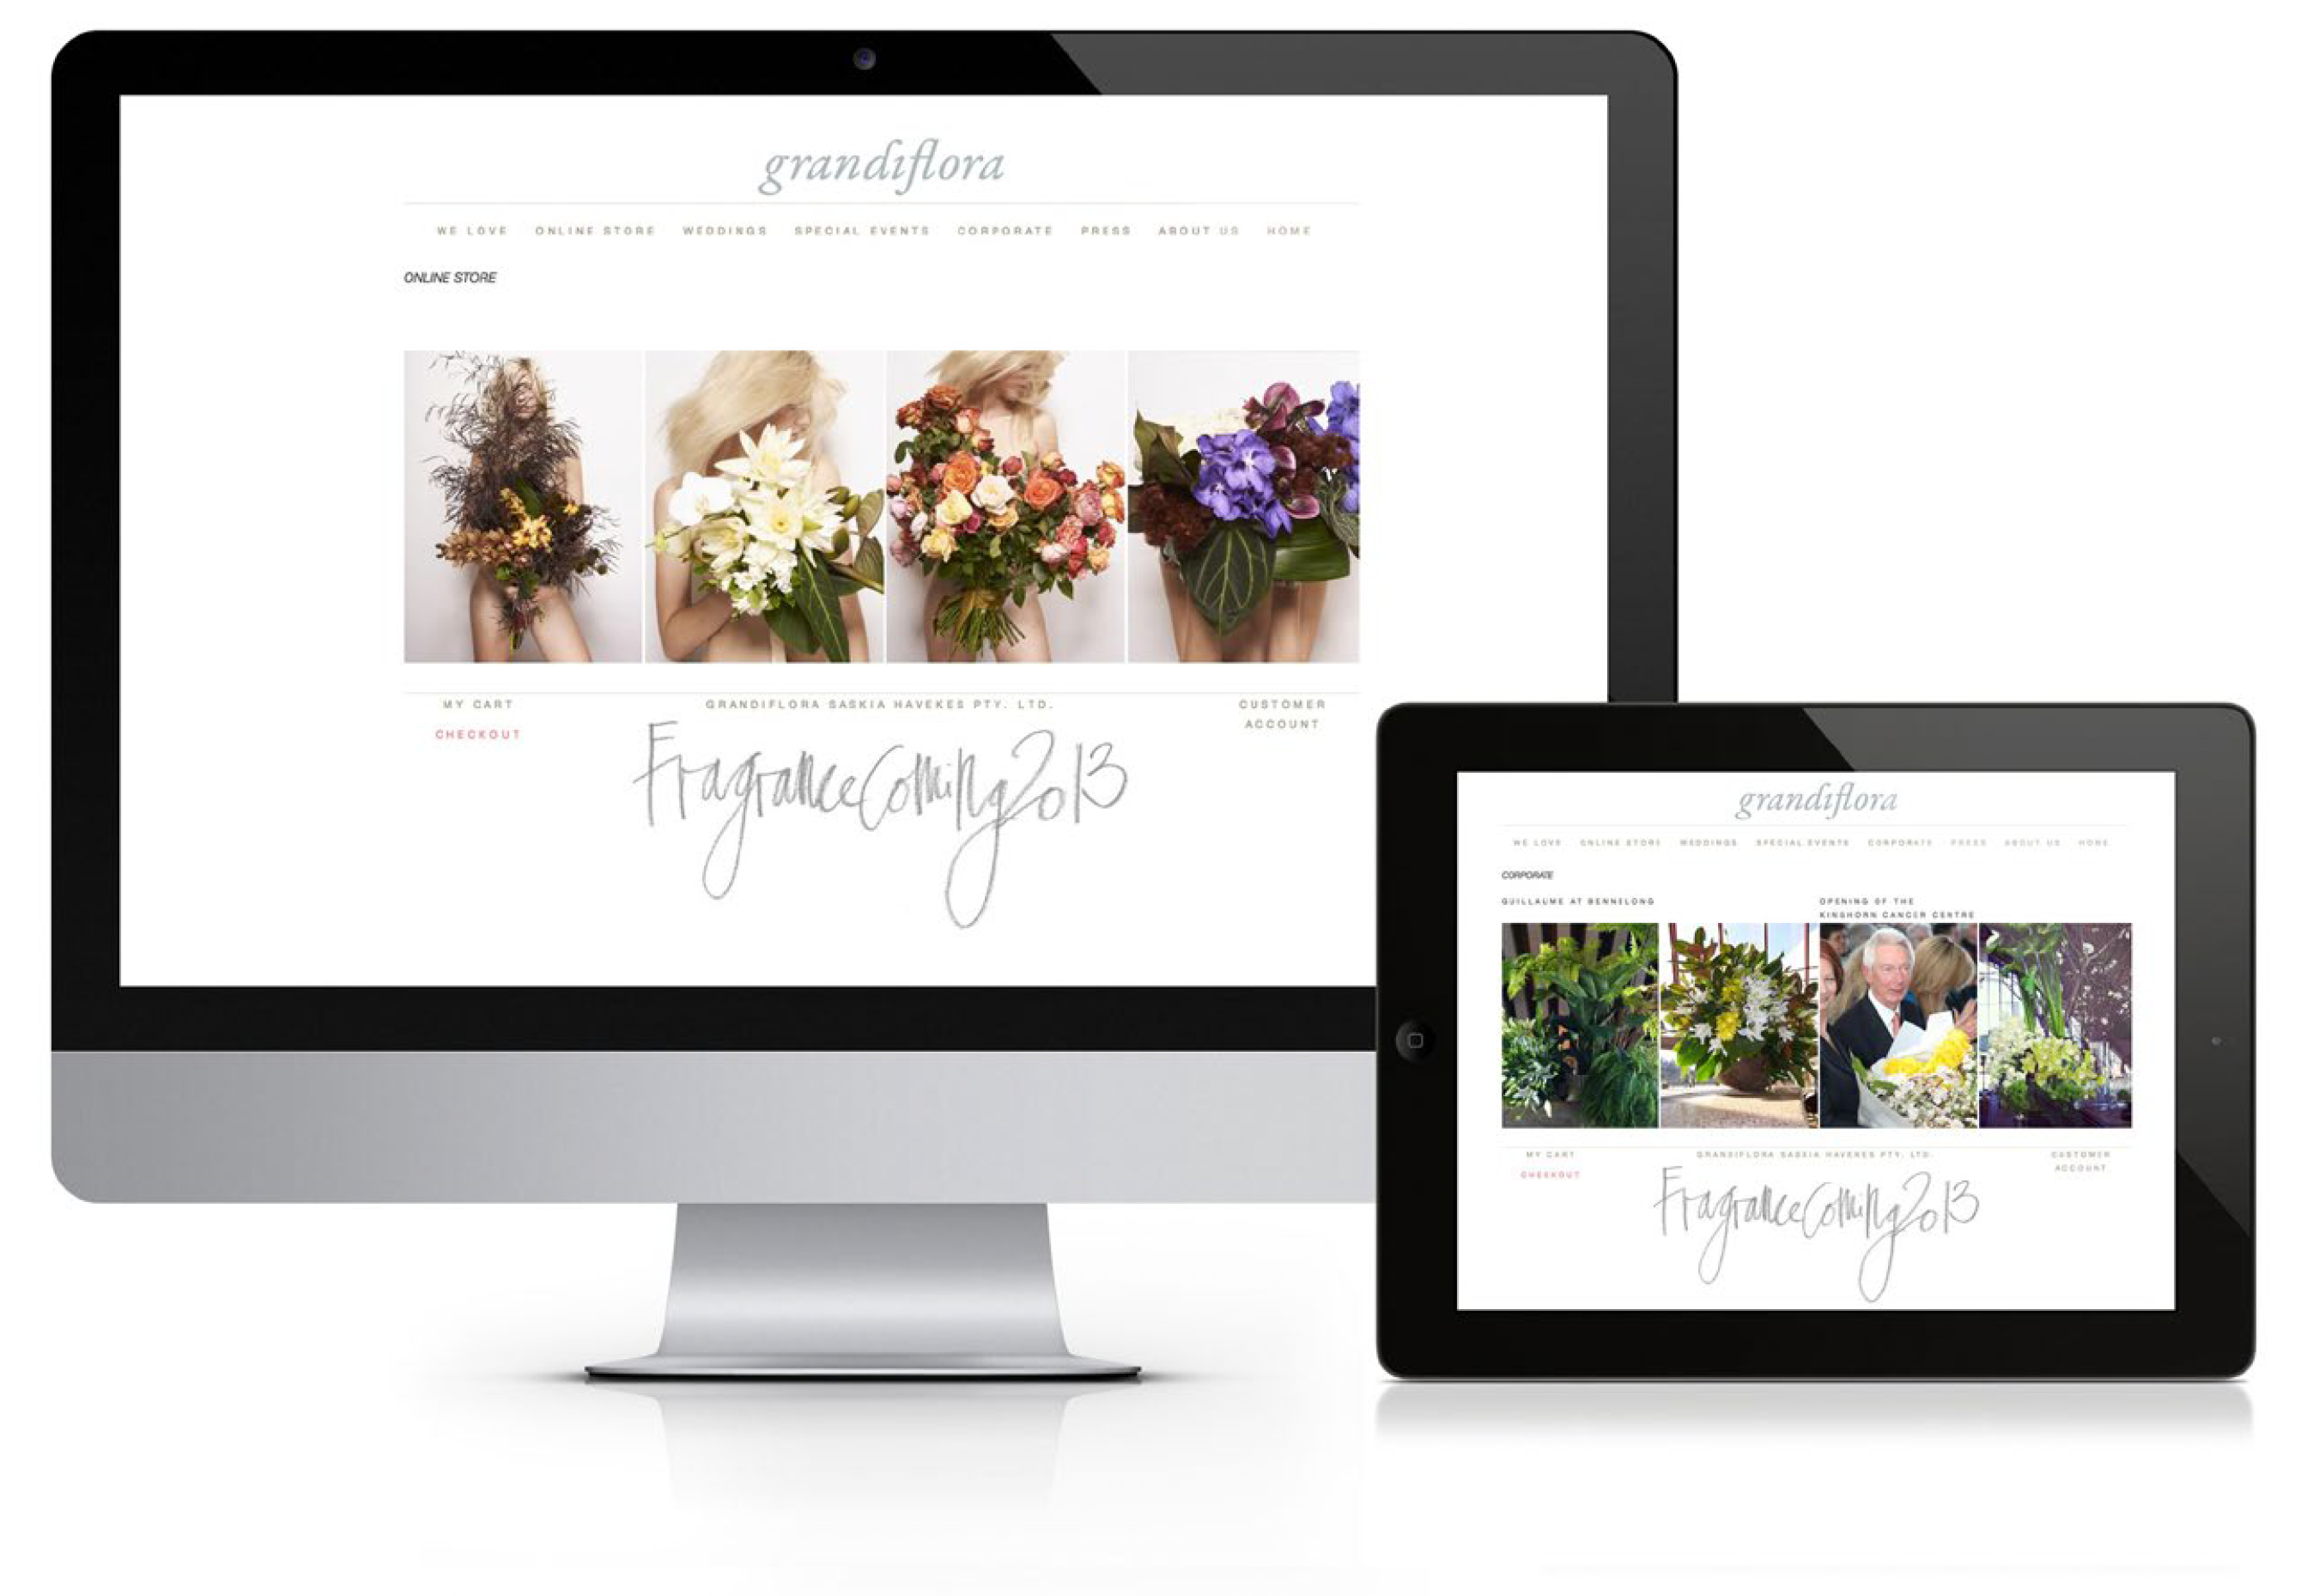 Grandiflora Website